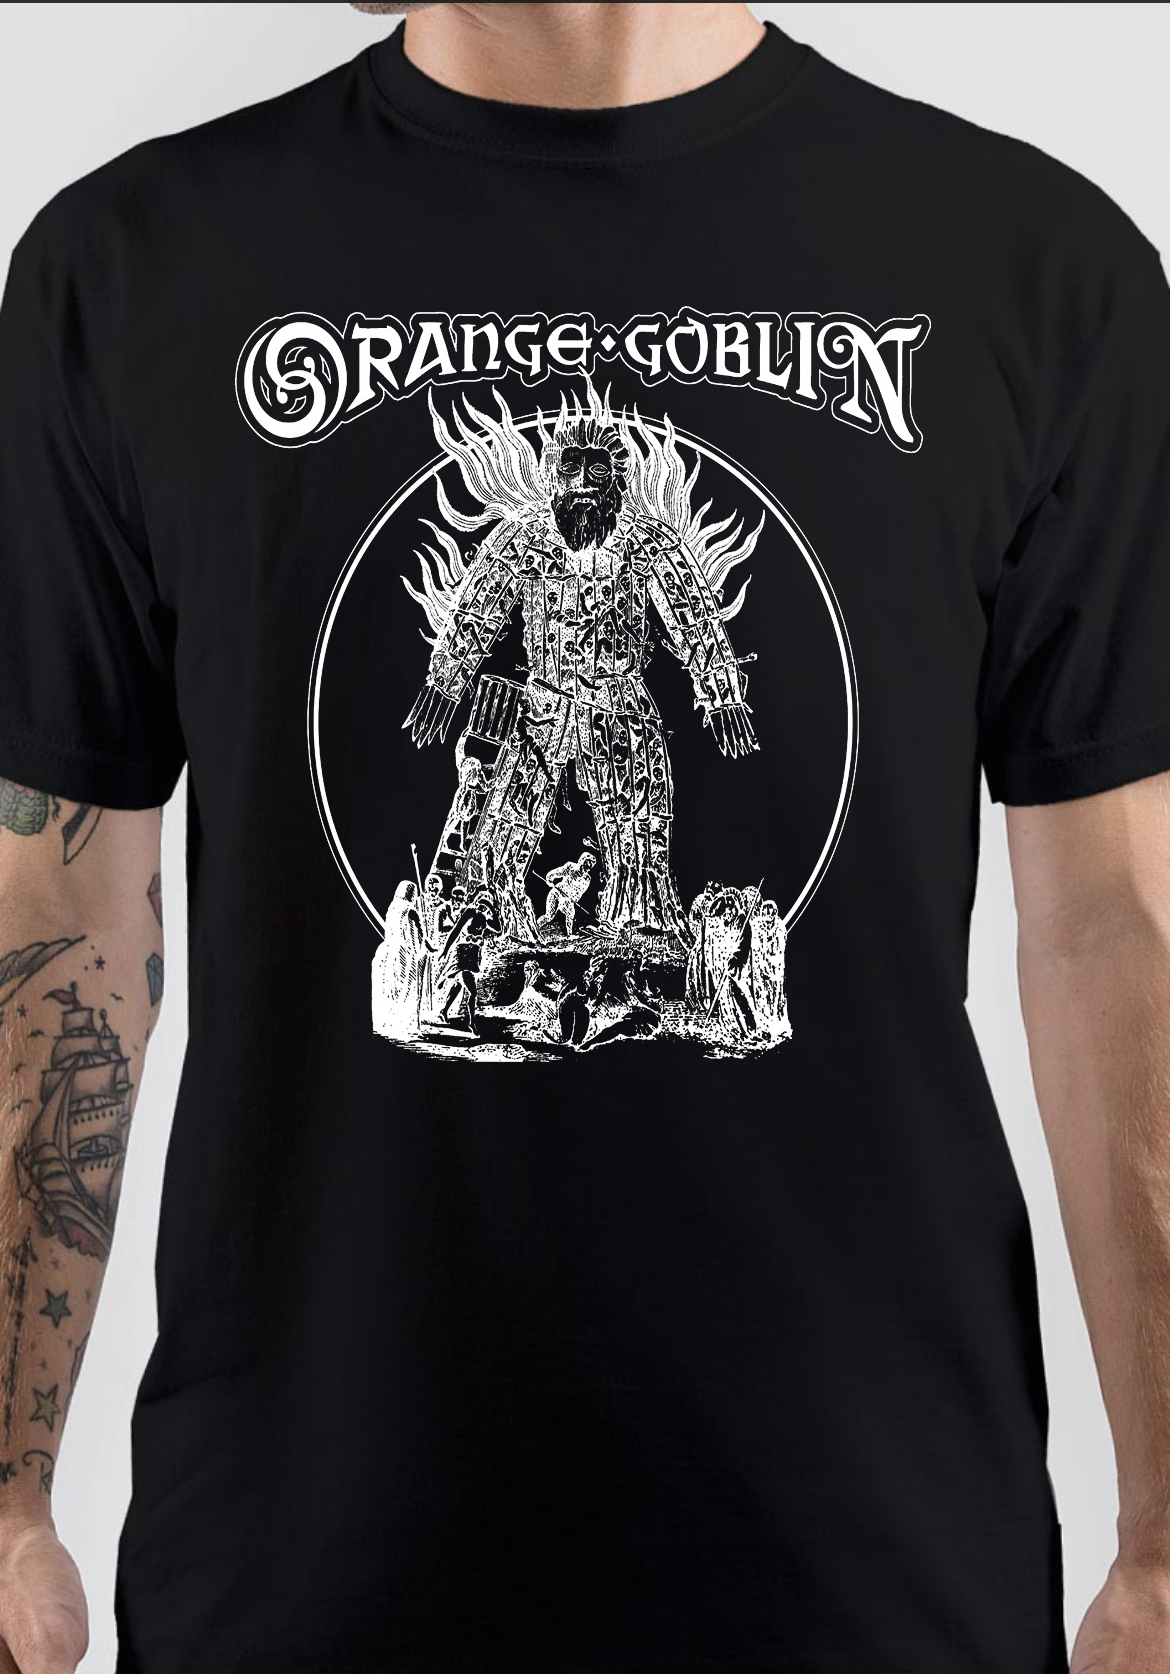 Orange Goblin T-Shirt And Merchandise